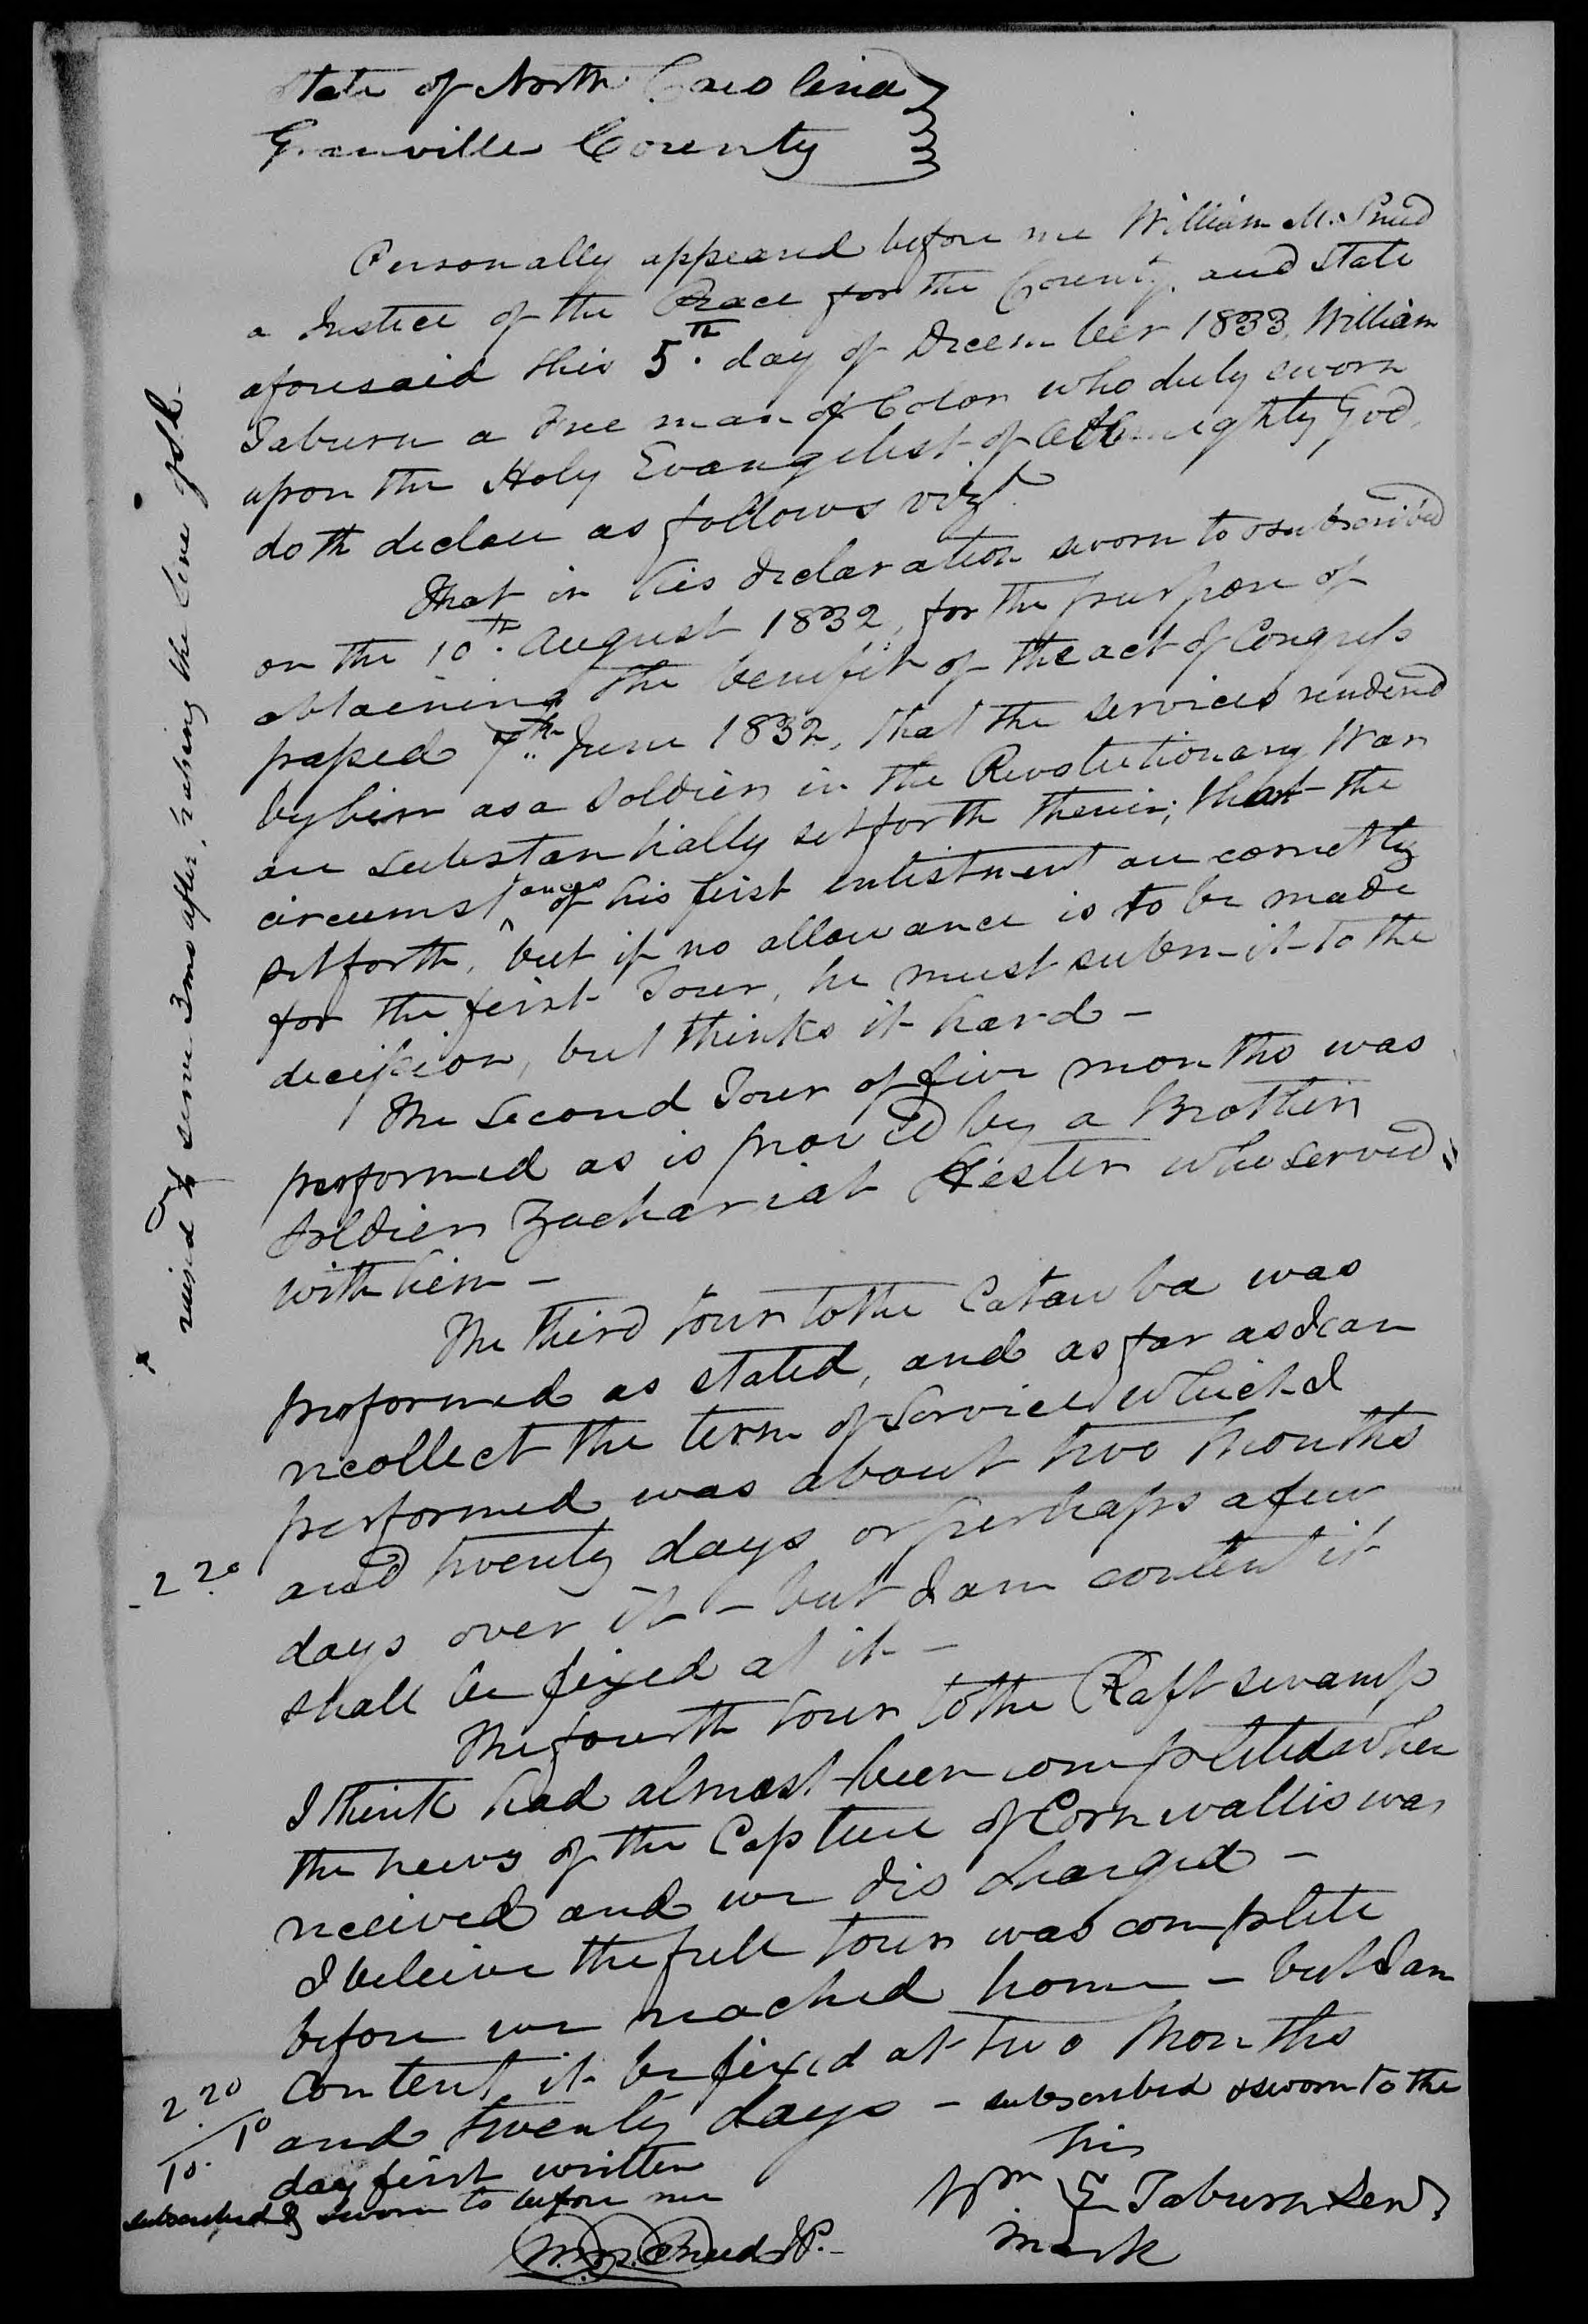 Application for a Veteran's Pension from William Taburn, 5 December 1833